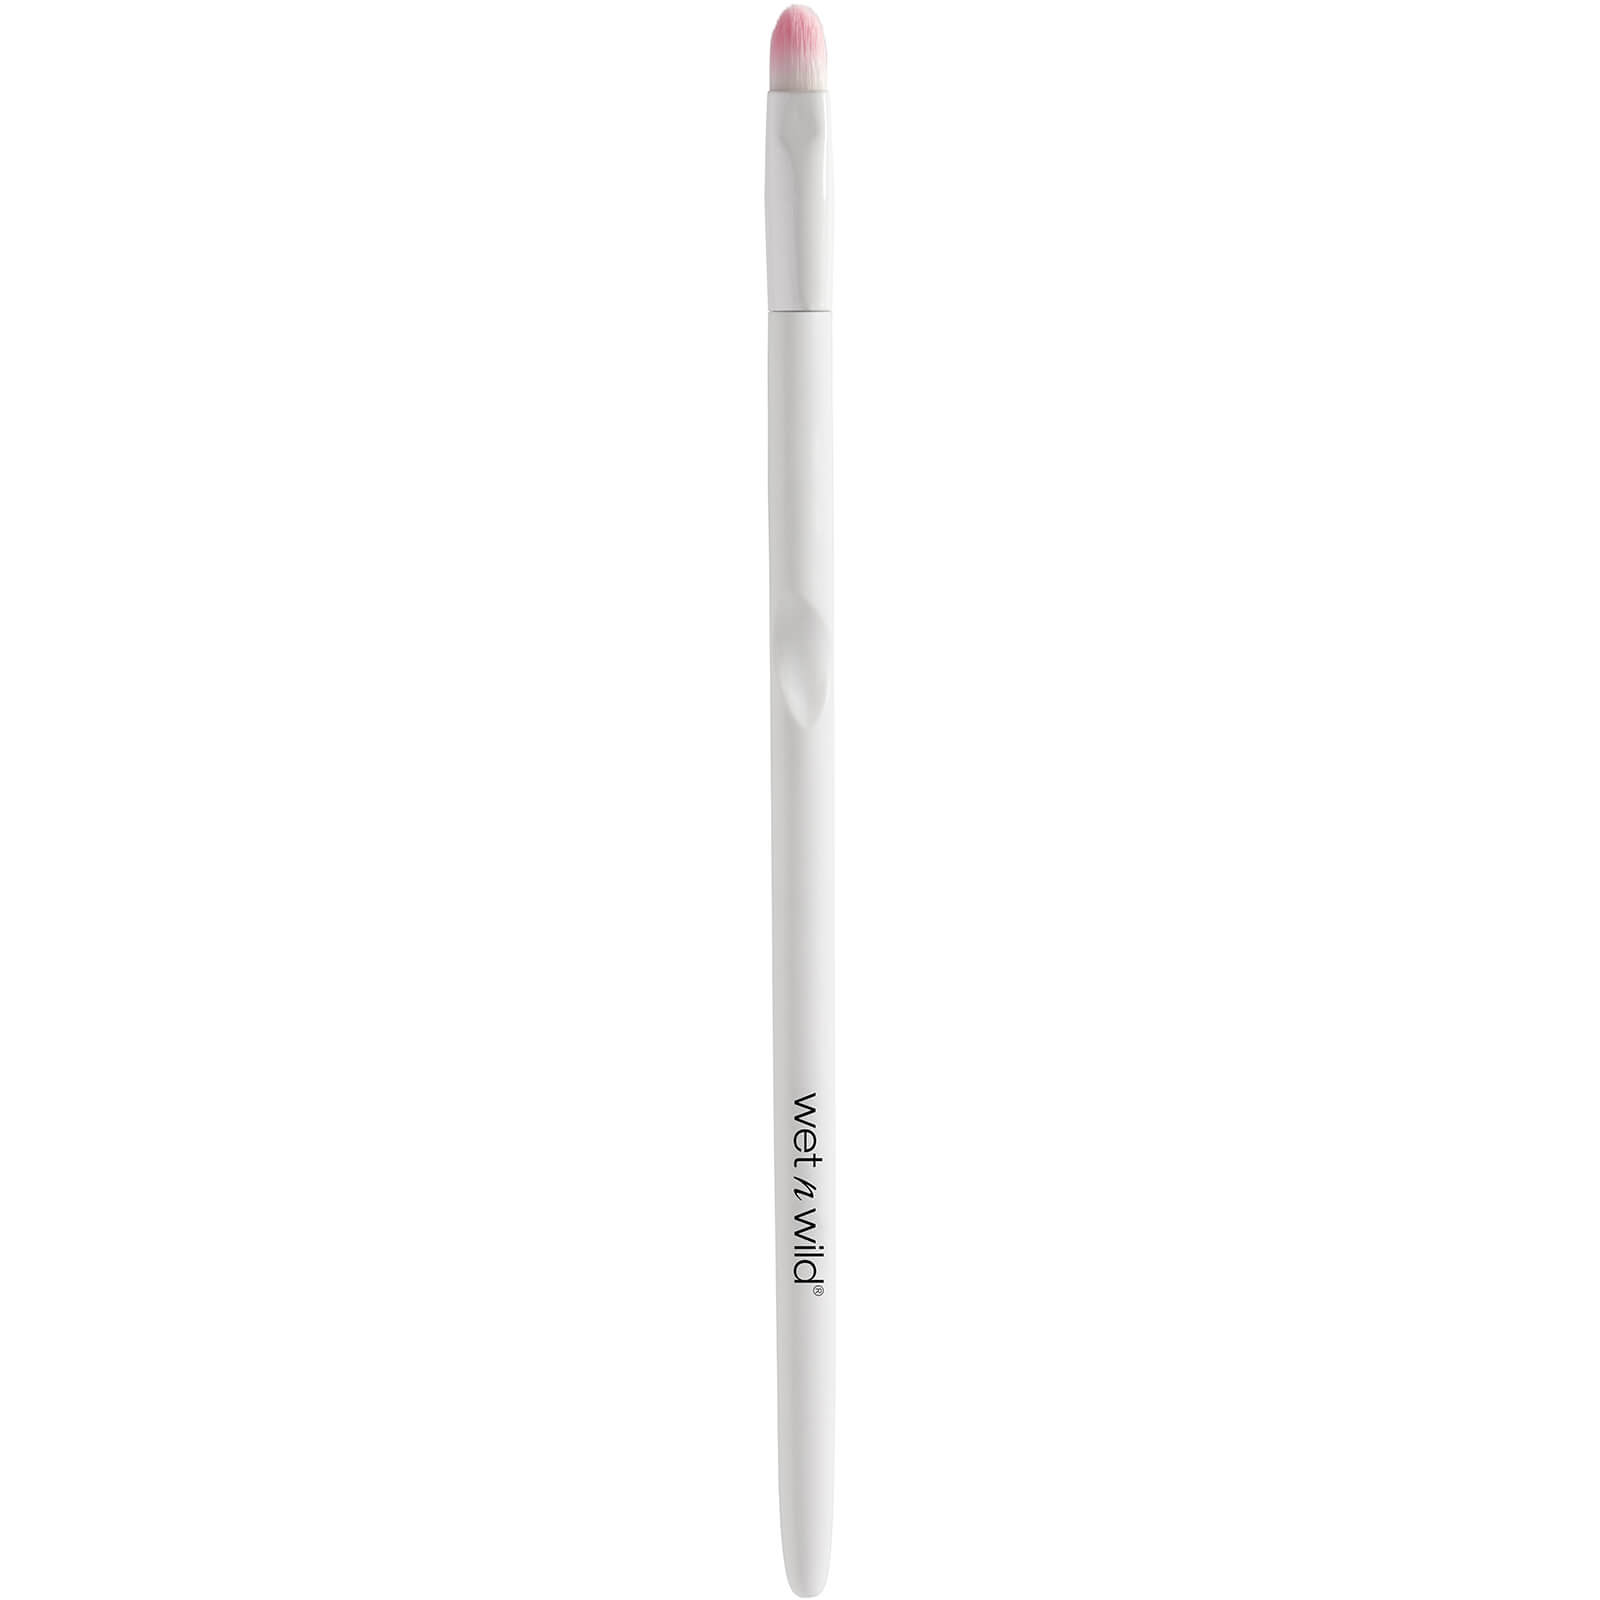 Image of wet n wild Makeup Brush 5.4g - Small Concealer Brush